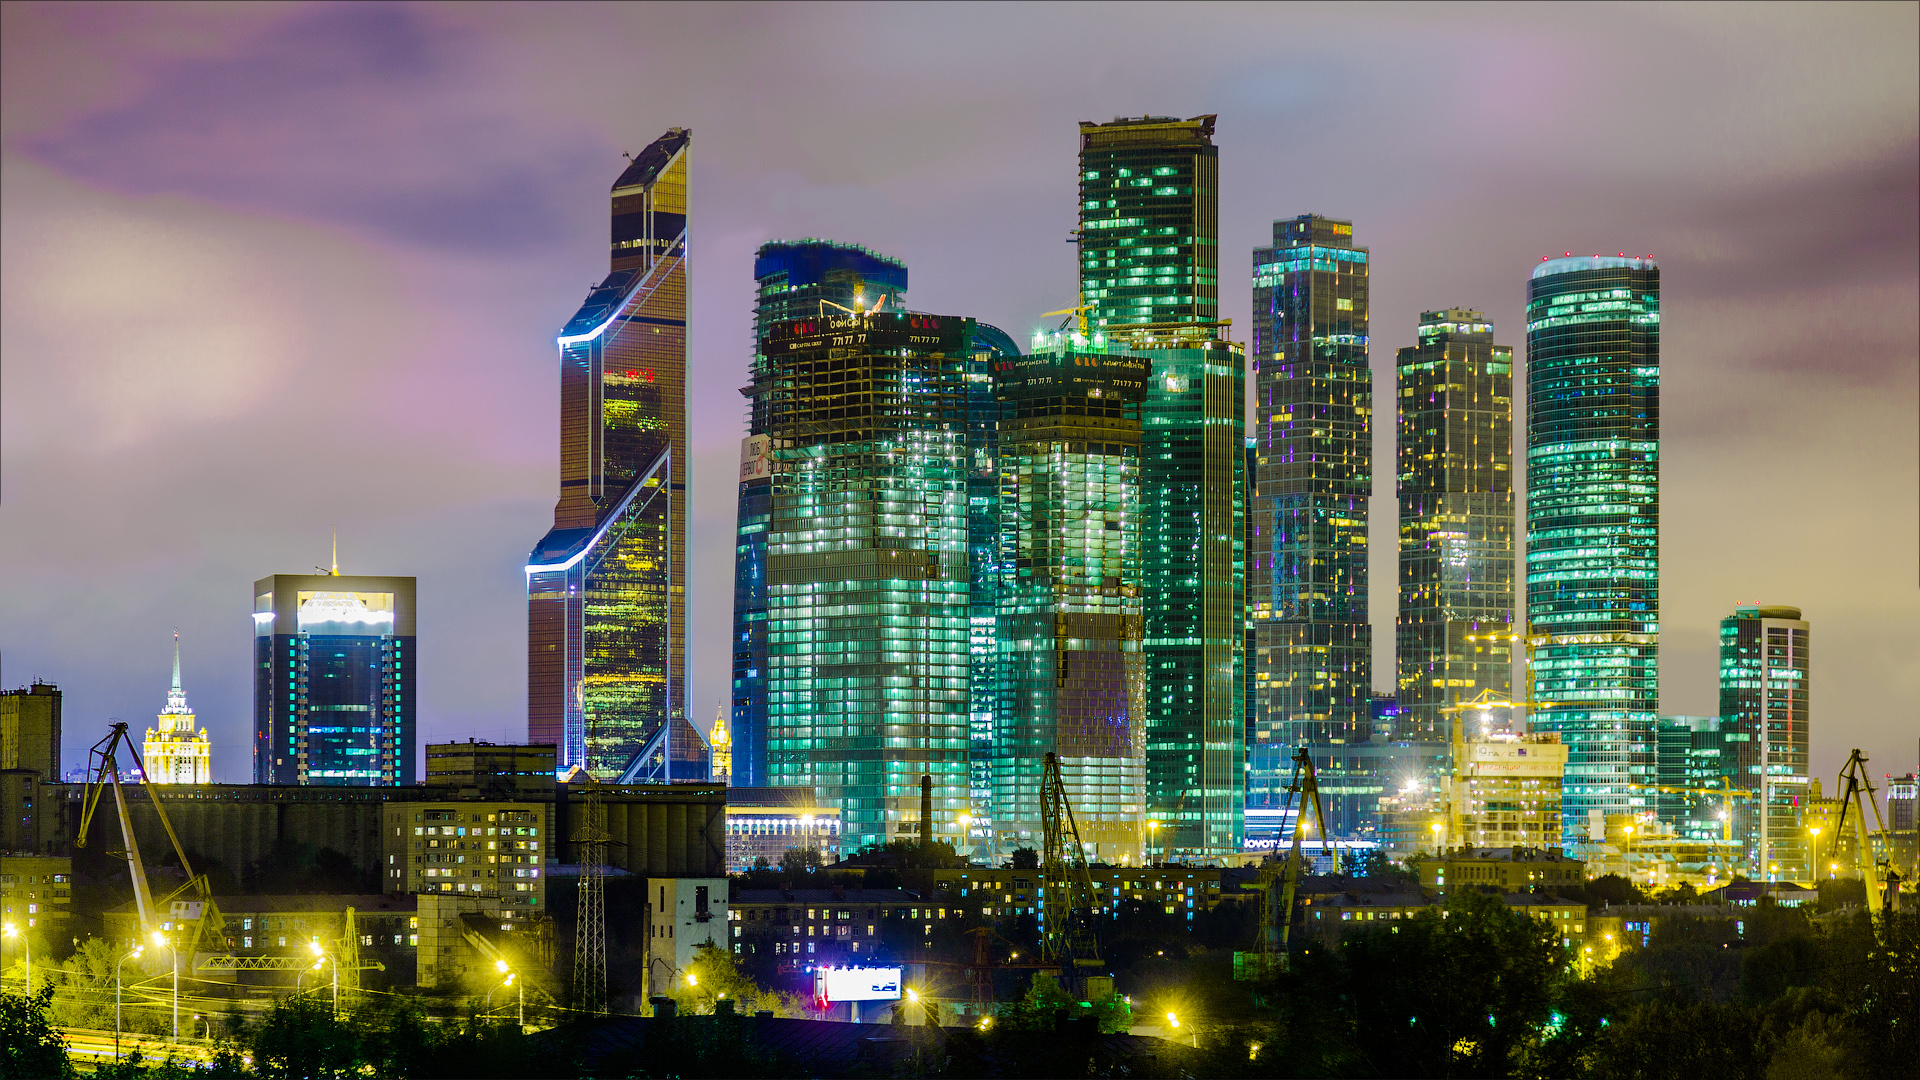 Moscow International Business Center at Night Wallpaper